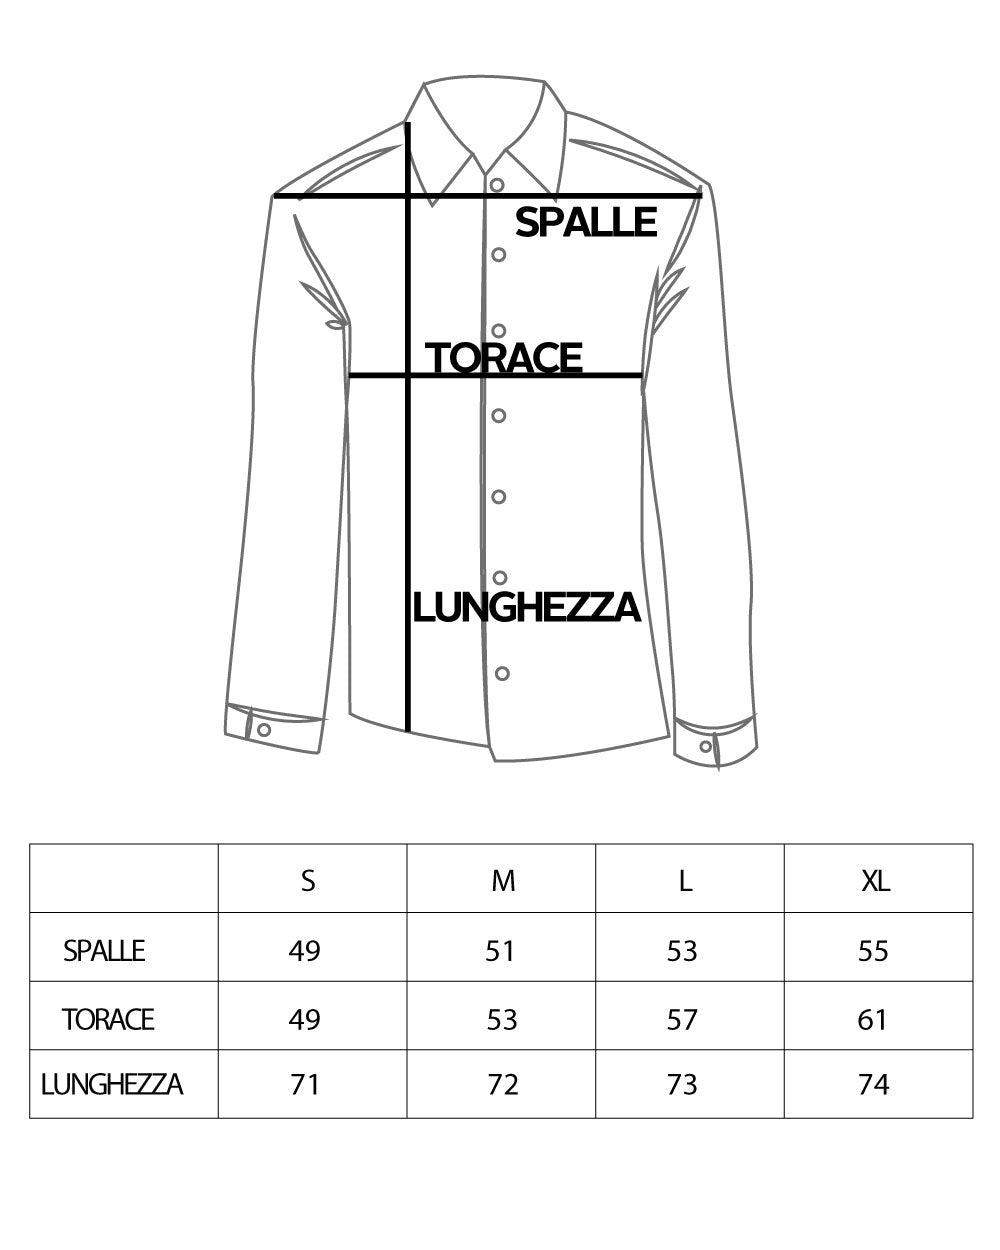 Men's Serafino Tunic Shirt Short Sleeve Casual Linen Solid Color Beige GIOSAL-CC1158A